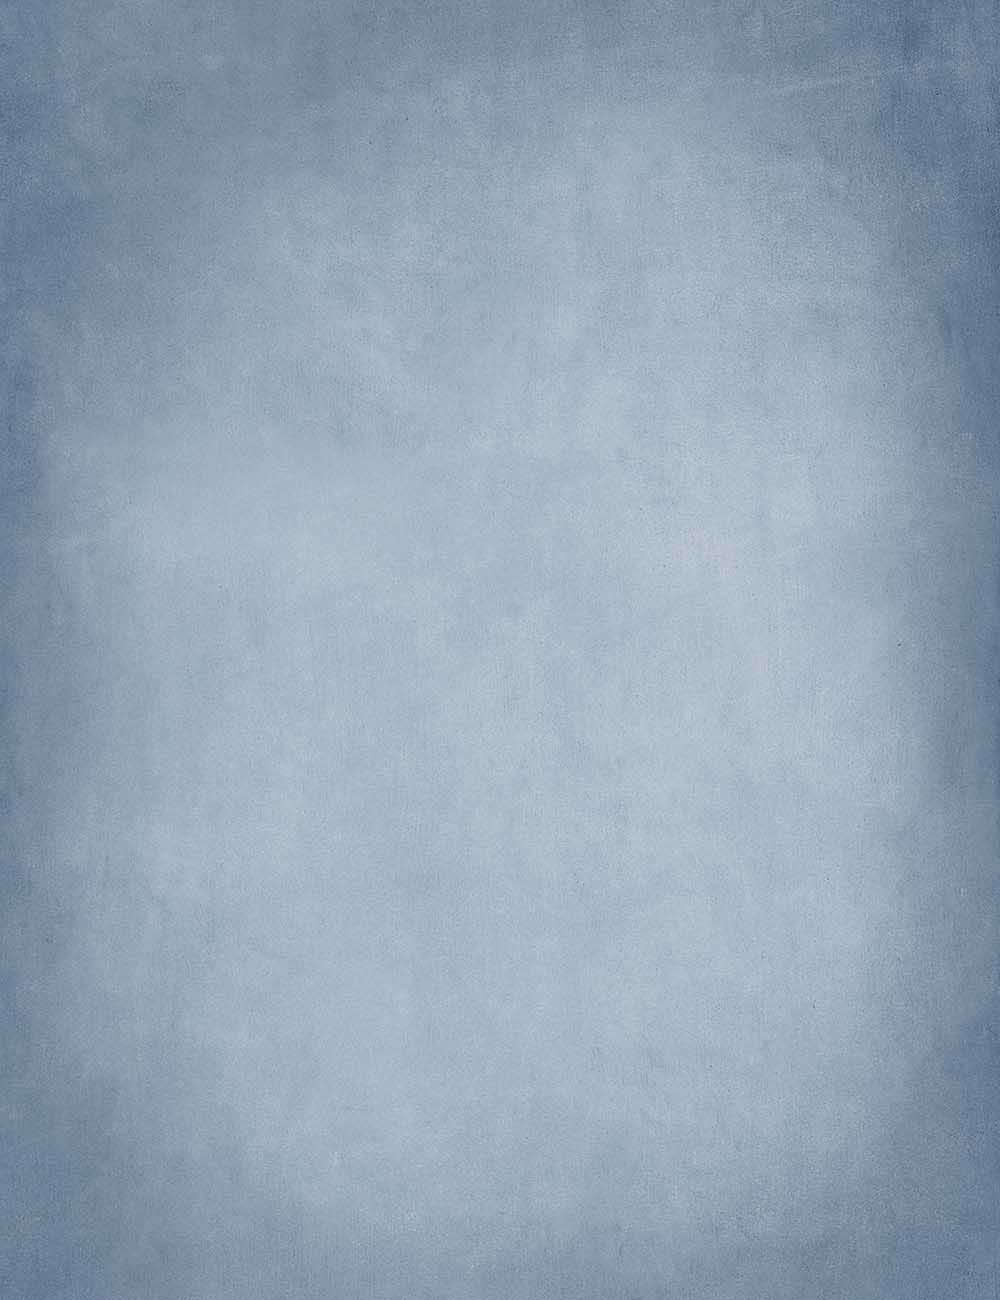 Abstract Powder Blue Texture Backdrop For Photo Studio Shopbackdrop